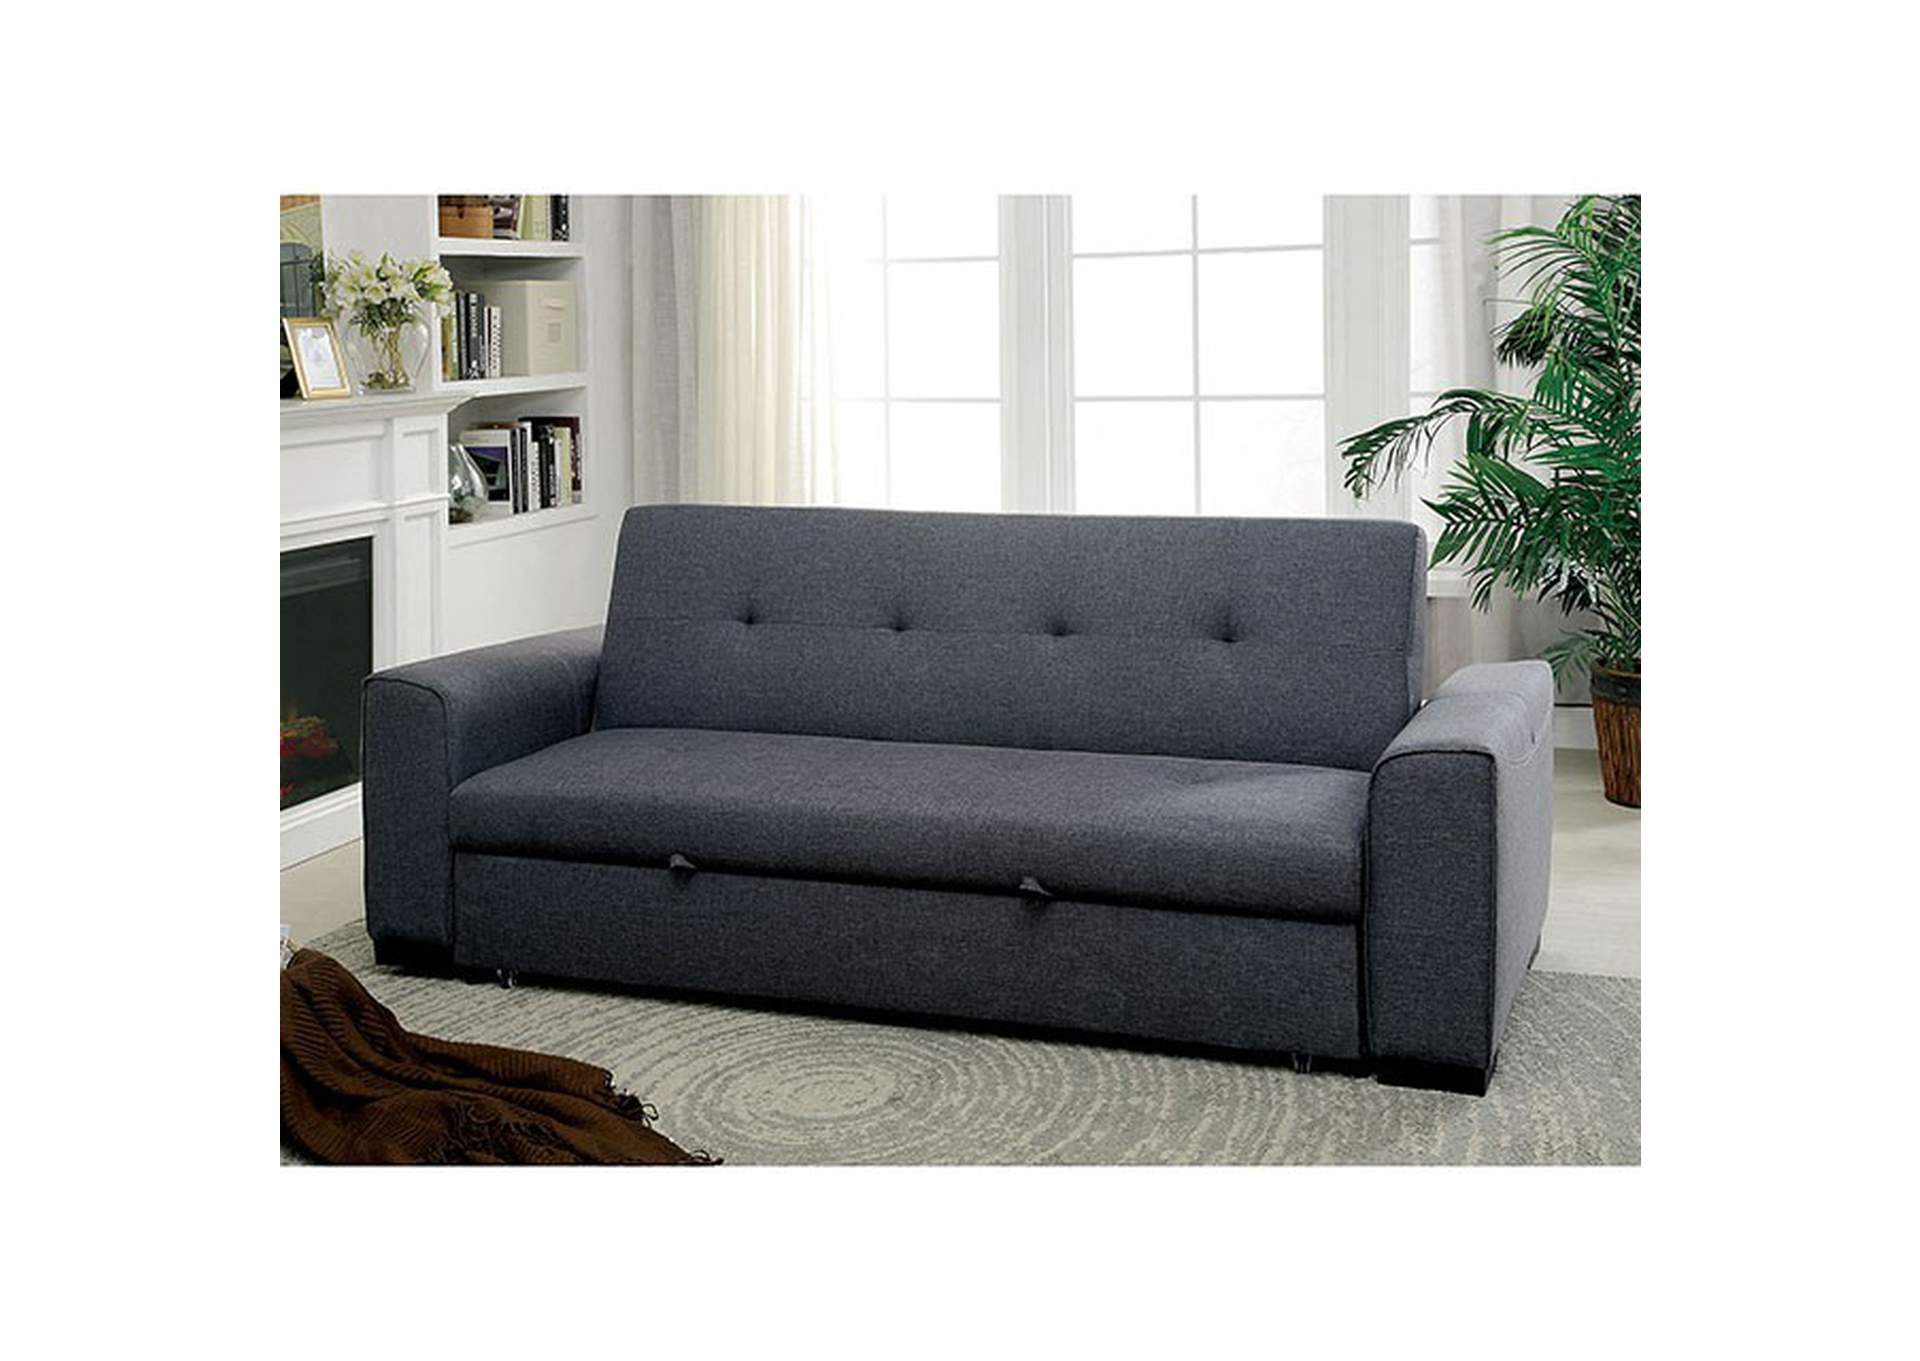 Reilly Futon Sofa,Furniture of America